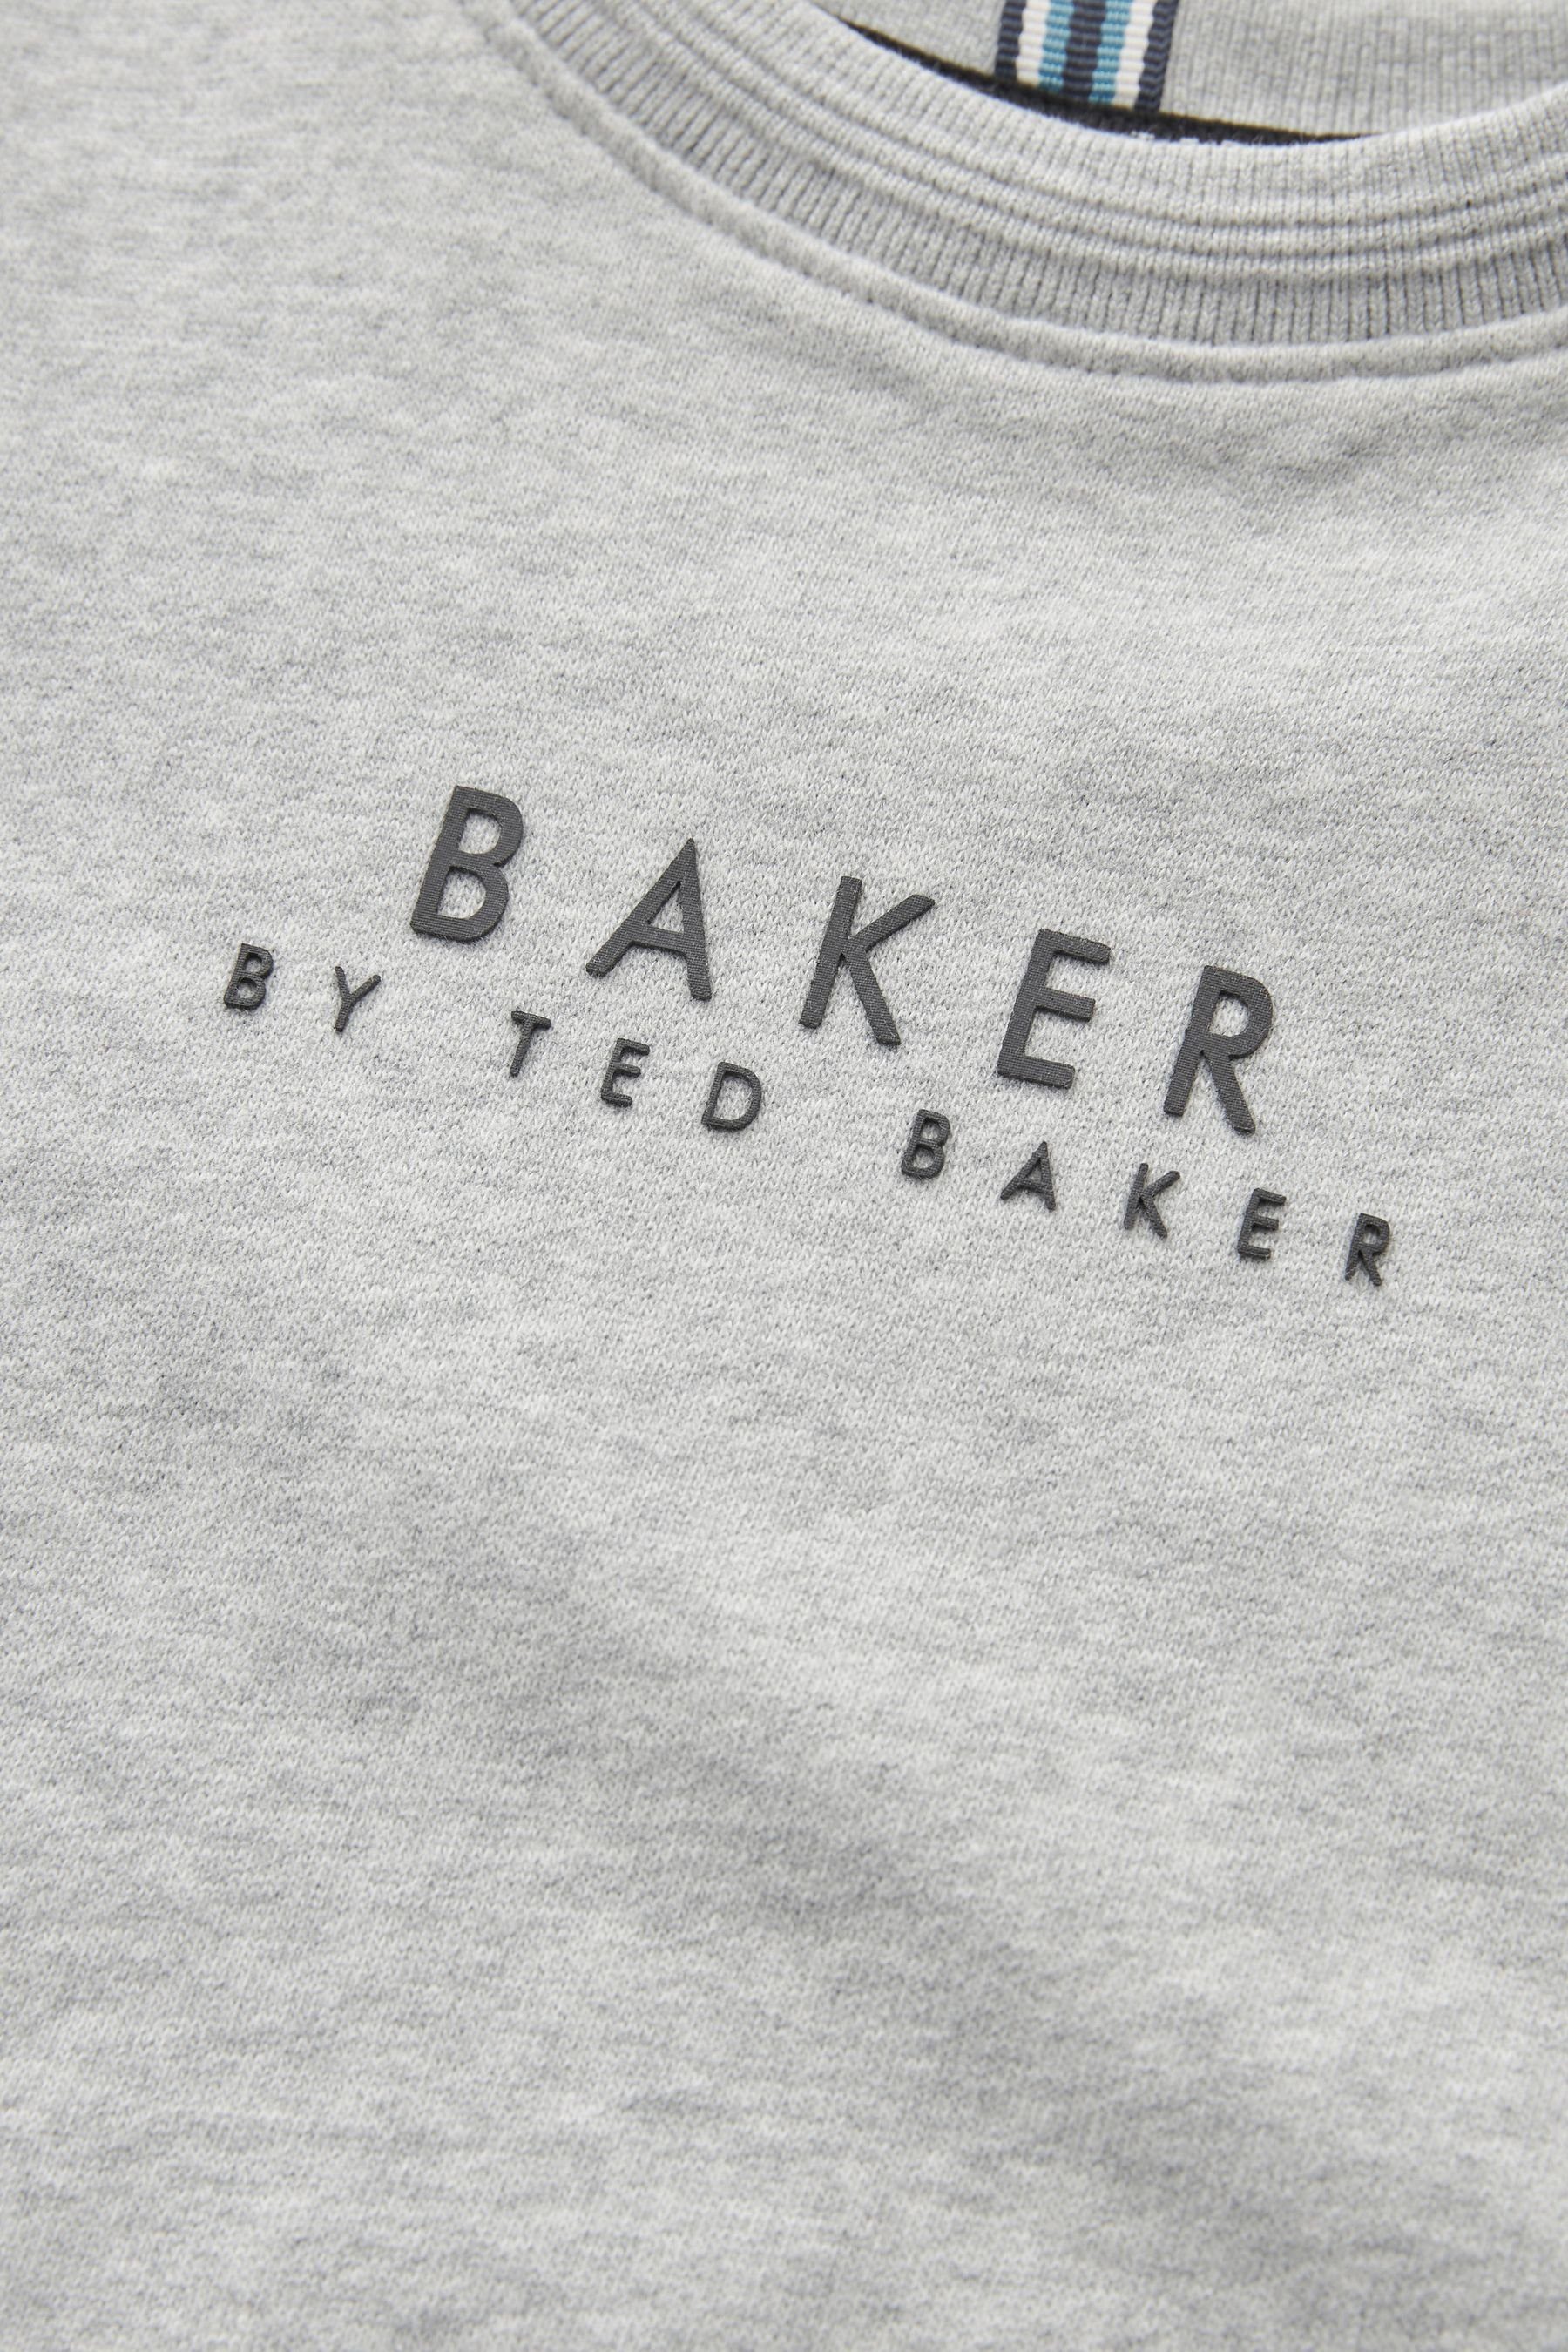 by Ted Ted by Sweatanzug Sweatshirt mit Baker Grey Baker Baker Jogginganzug Baker (2-tlg)